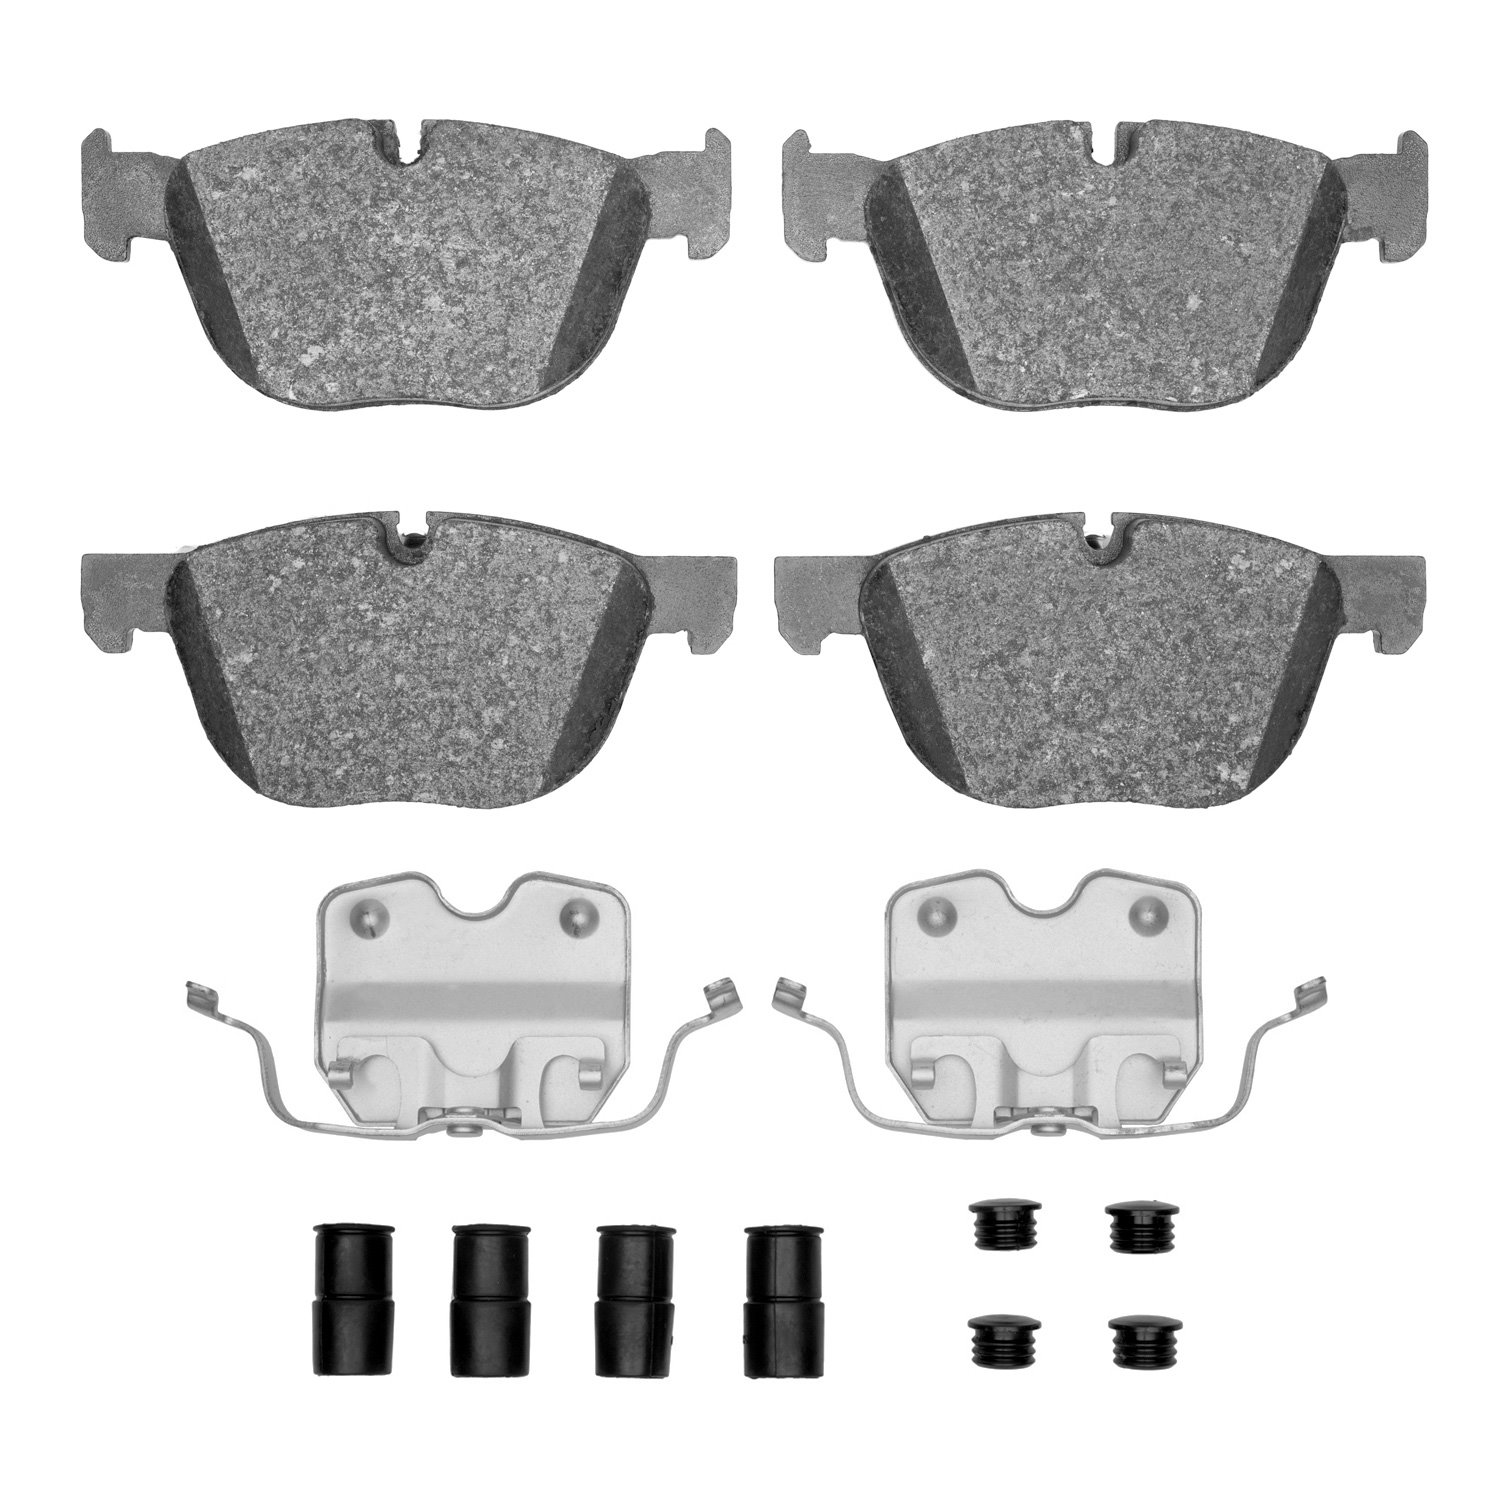 1551-1294-01 5000 Advanced Ceramic Brake Pads & Hardware Kit, 2014-2019 BMW, Position: Front